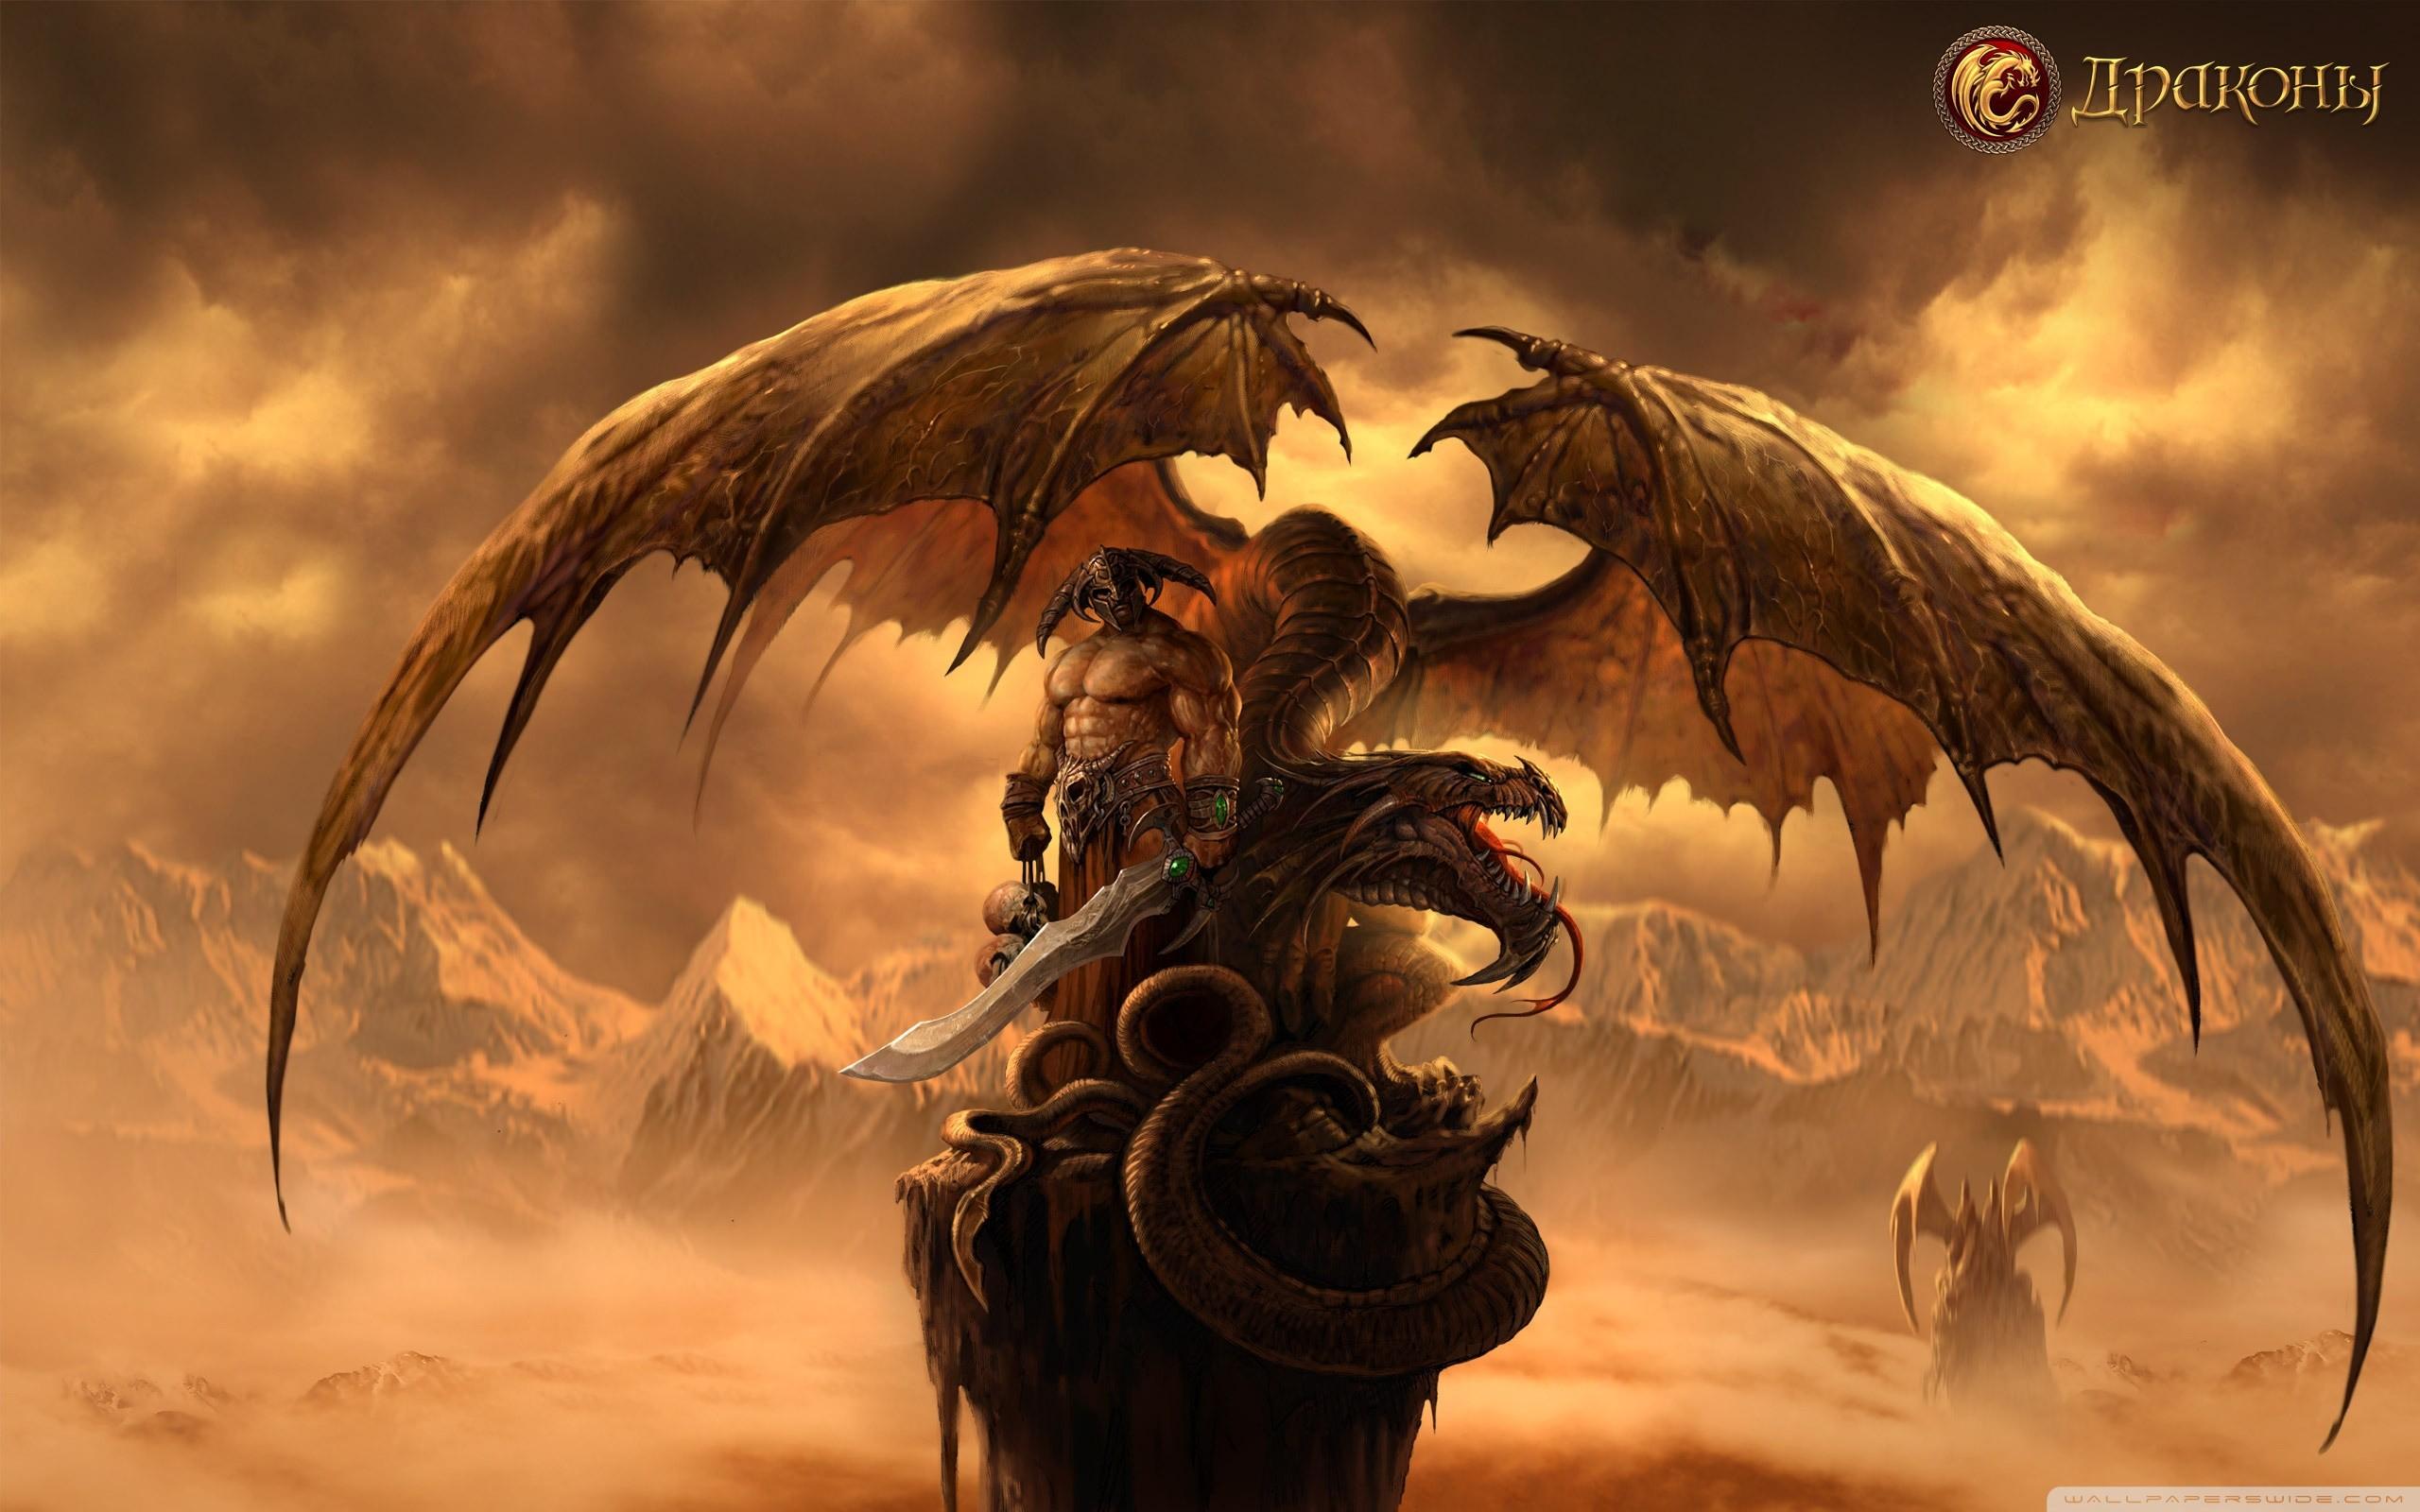 Dragon Warrior Wallpaper background picture